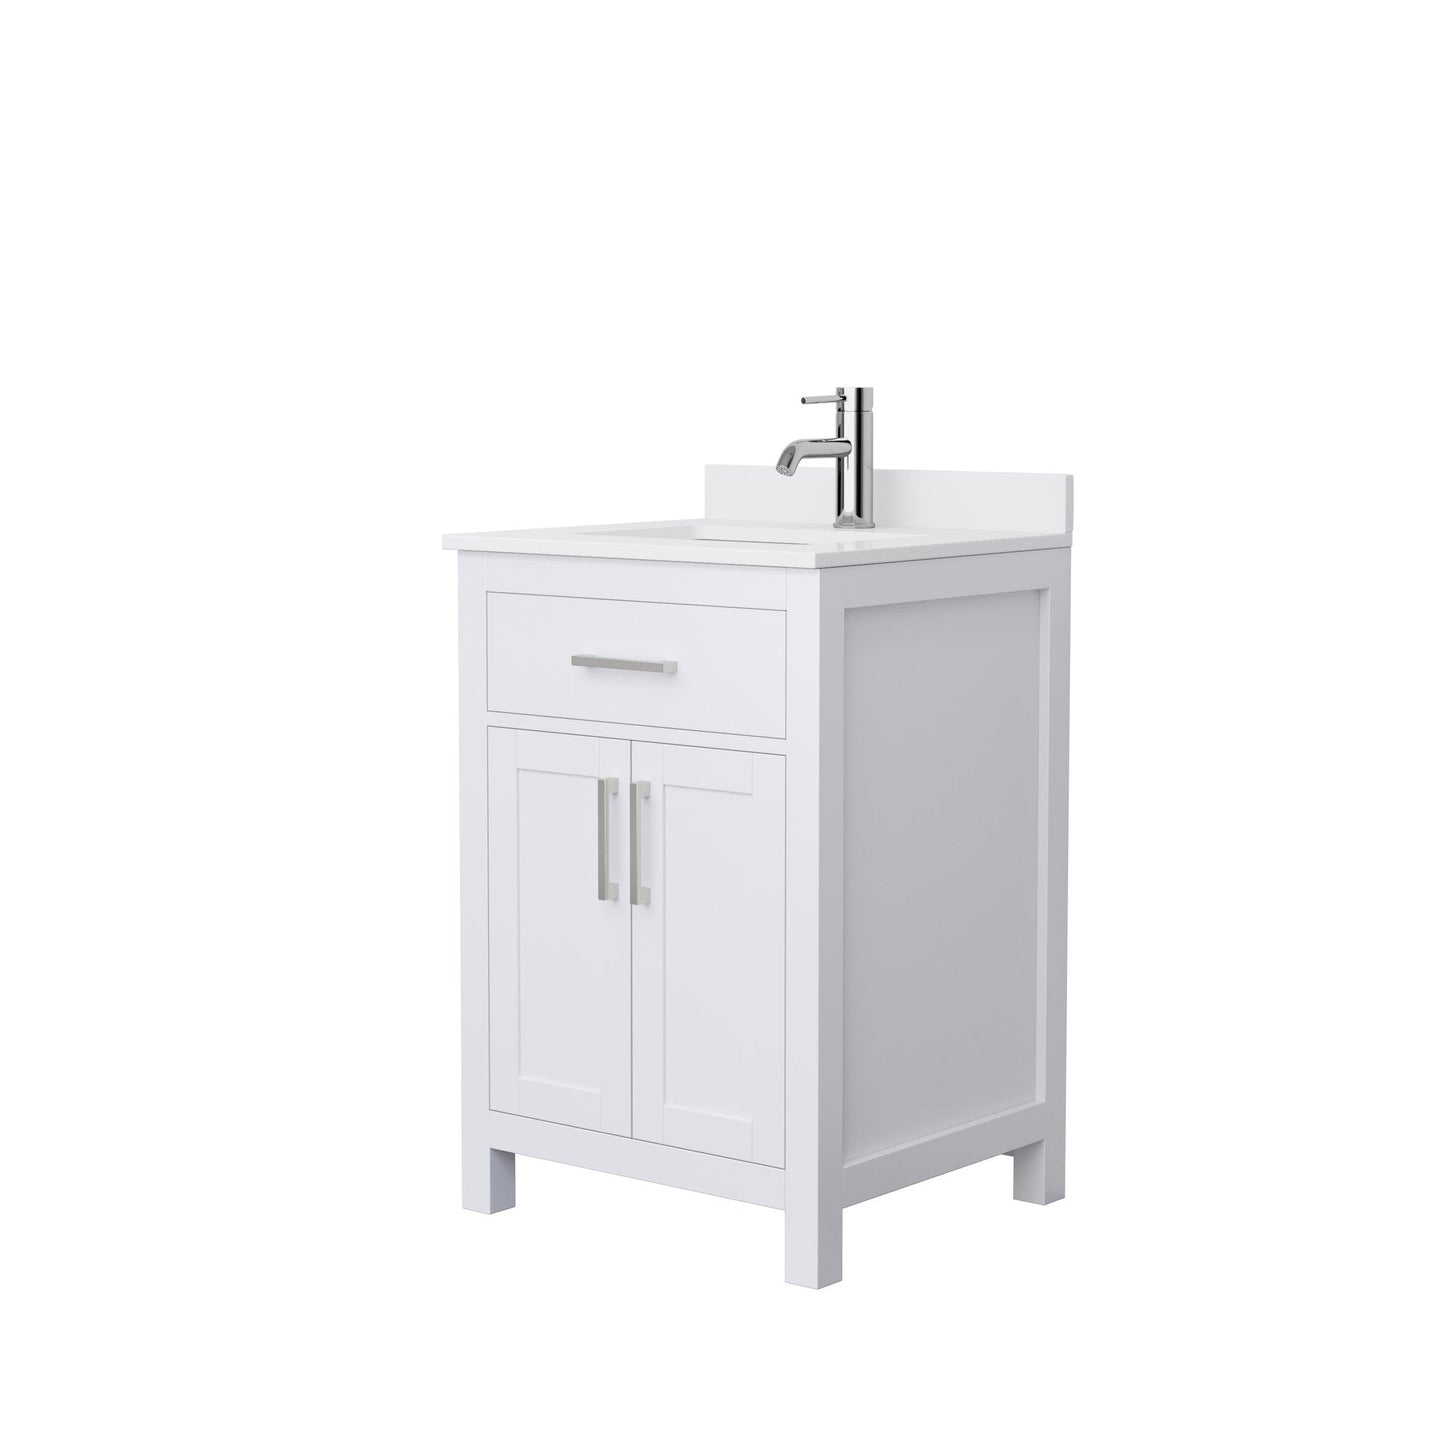 Beckett 24" Single Bathroom Vanity in White, White Cultured Marble Countertop, Undermount Square Sink, Brushed Nickel Trim